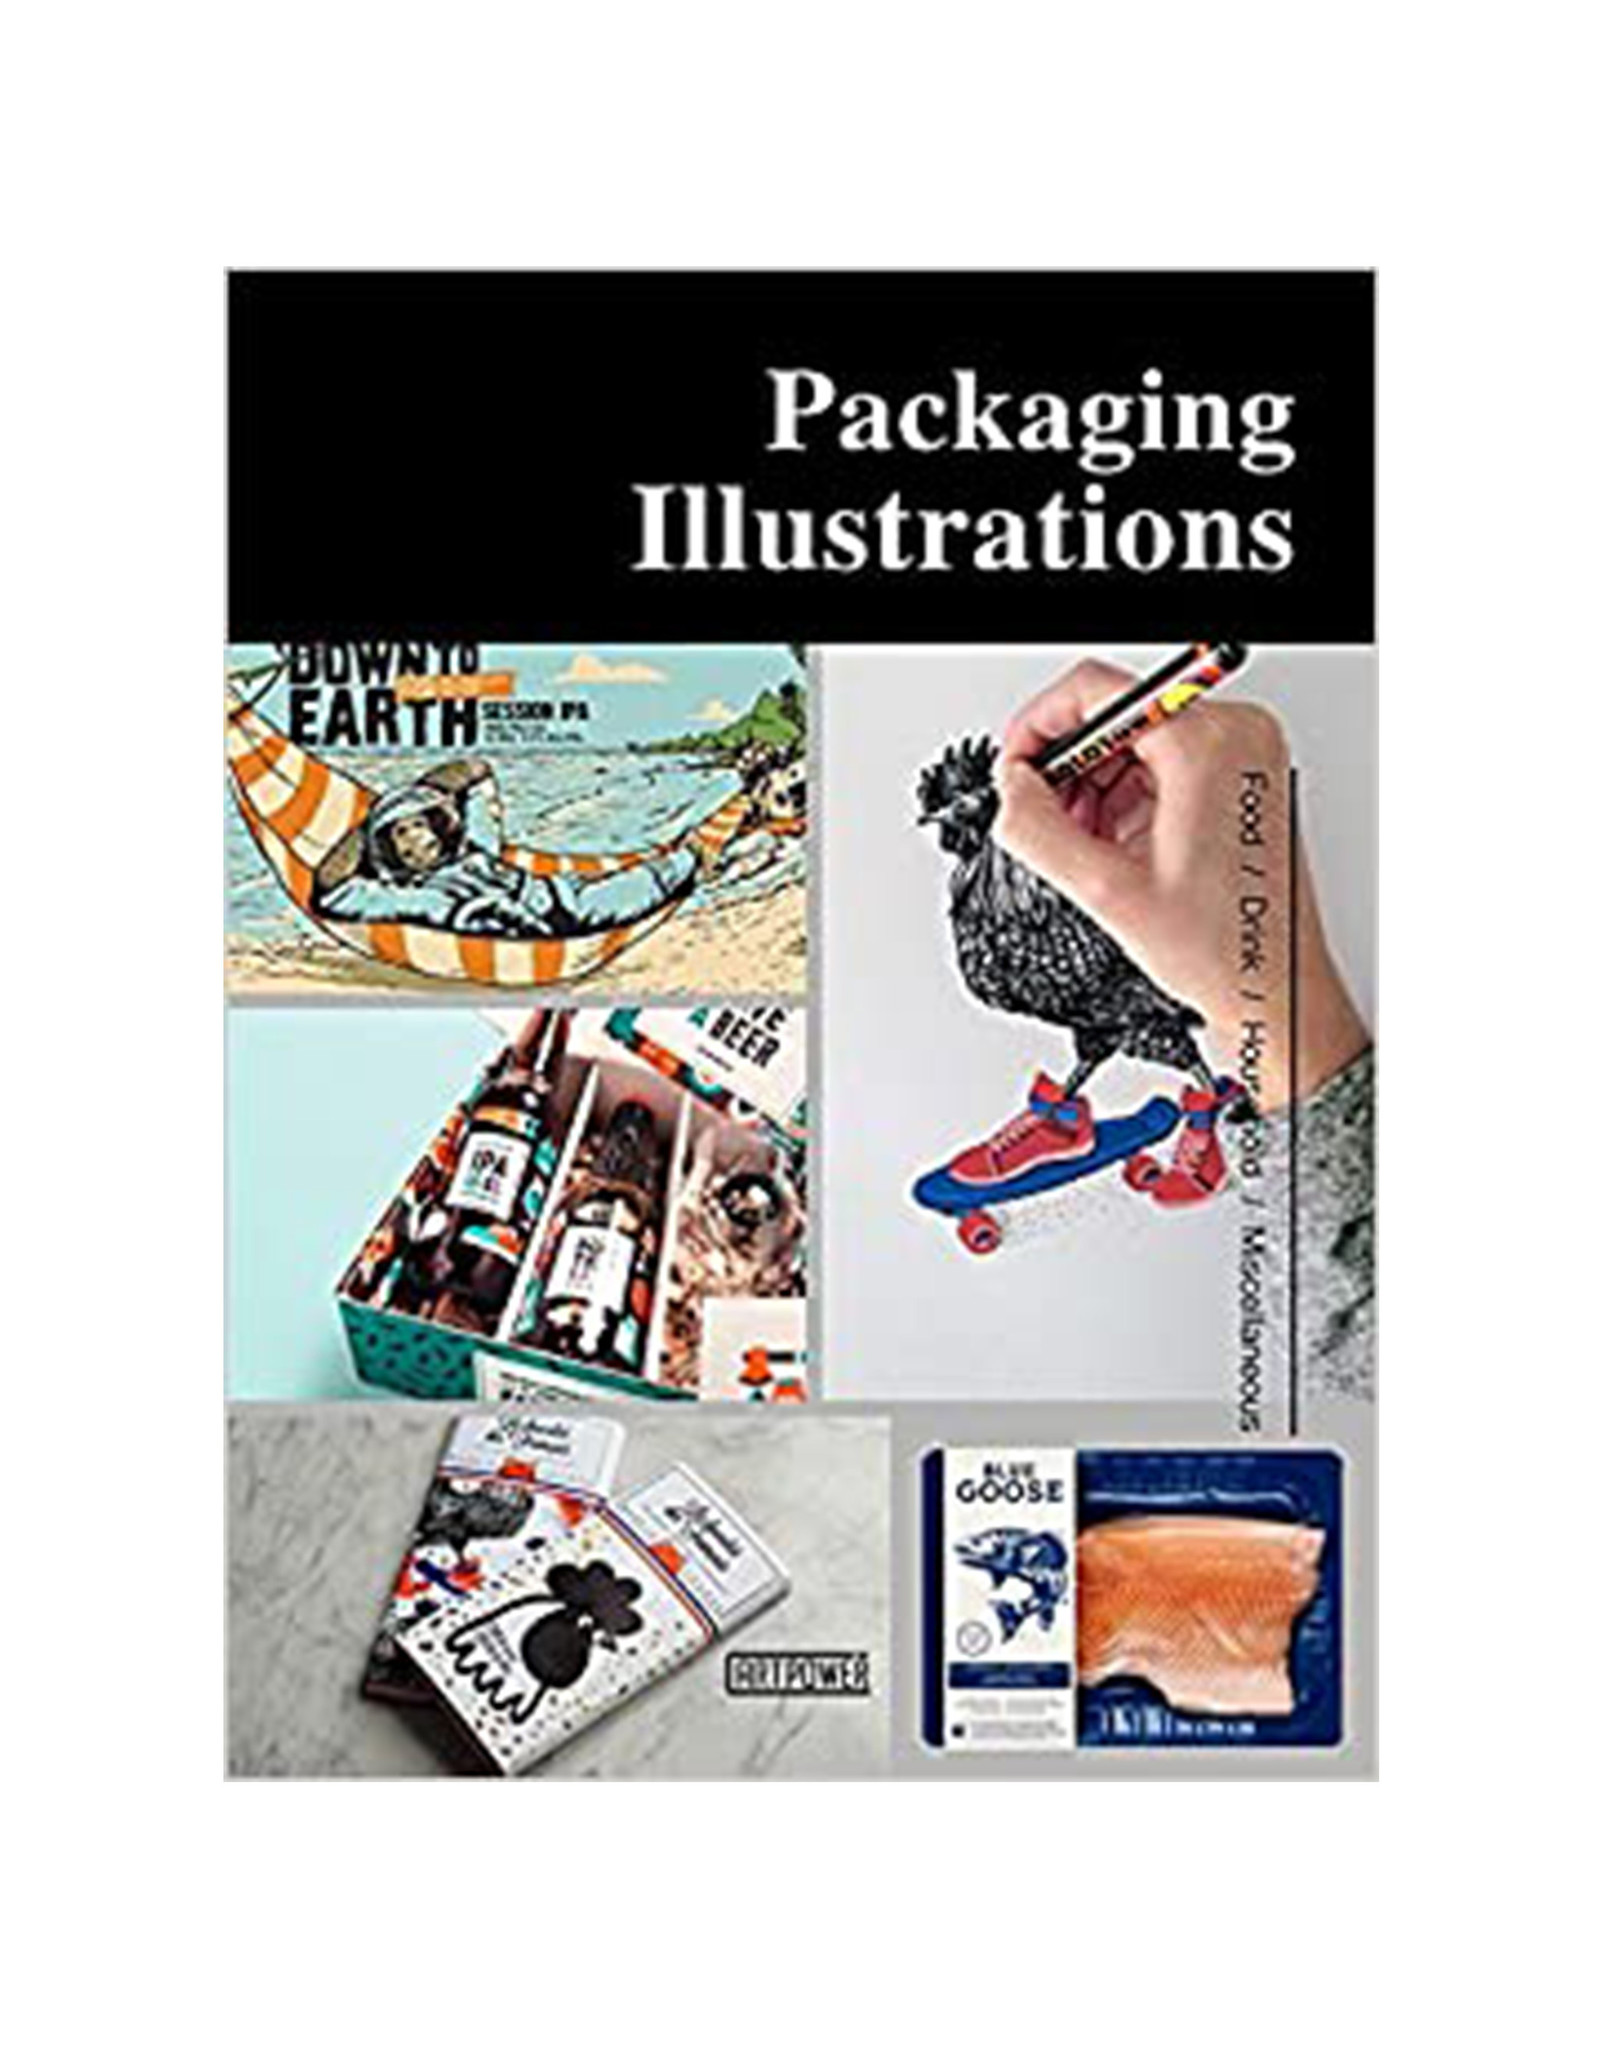 Packaging Illustrations